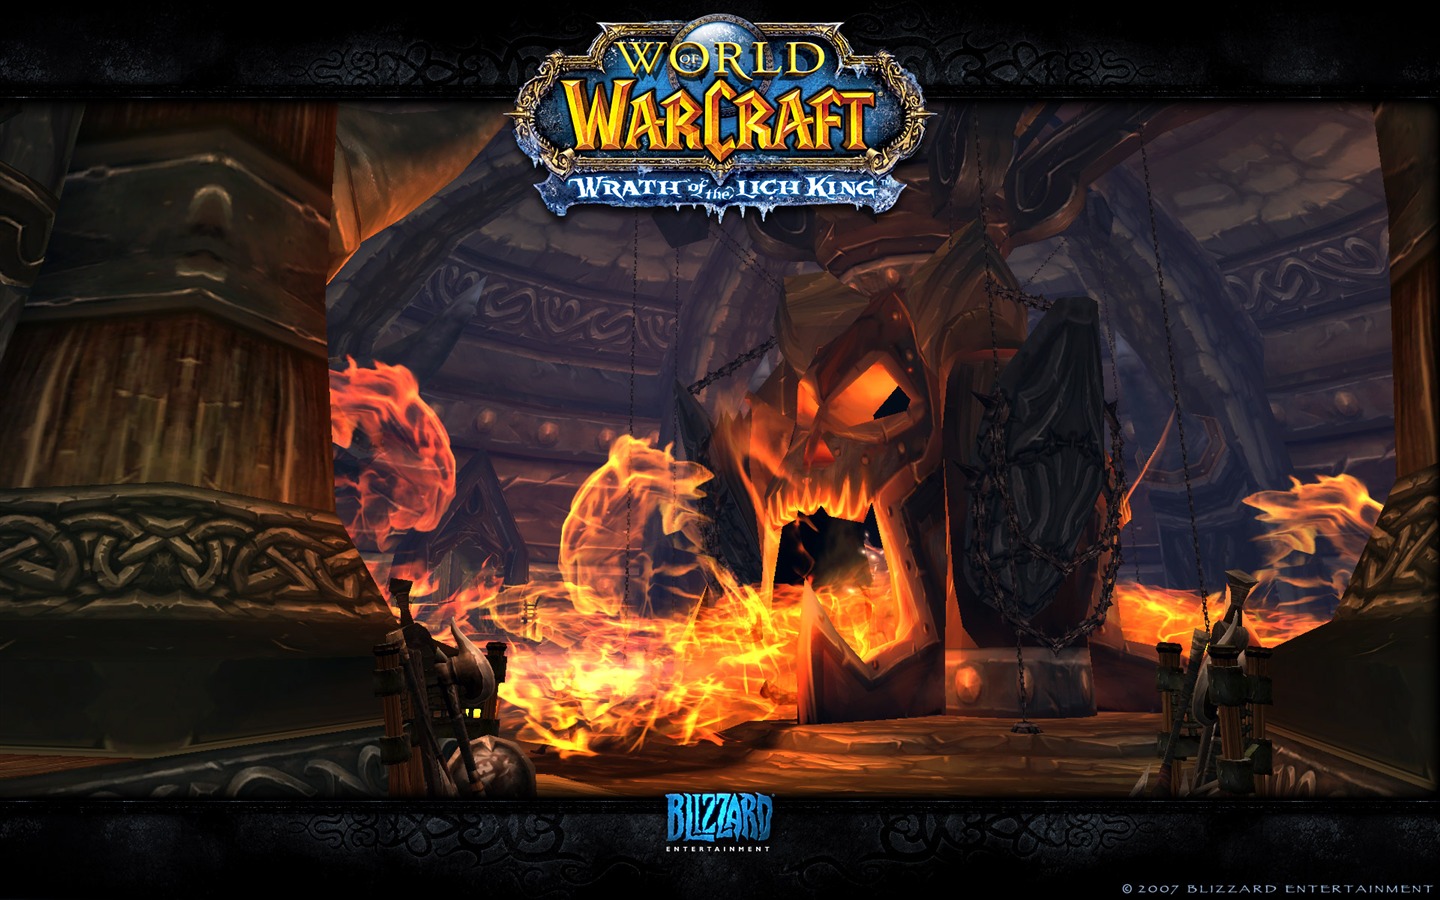 World of Warcraft 魔兽世界高清壁纸(二)5 - 1440x900